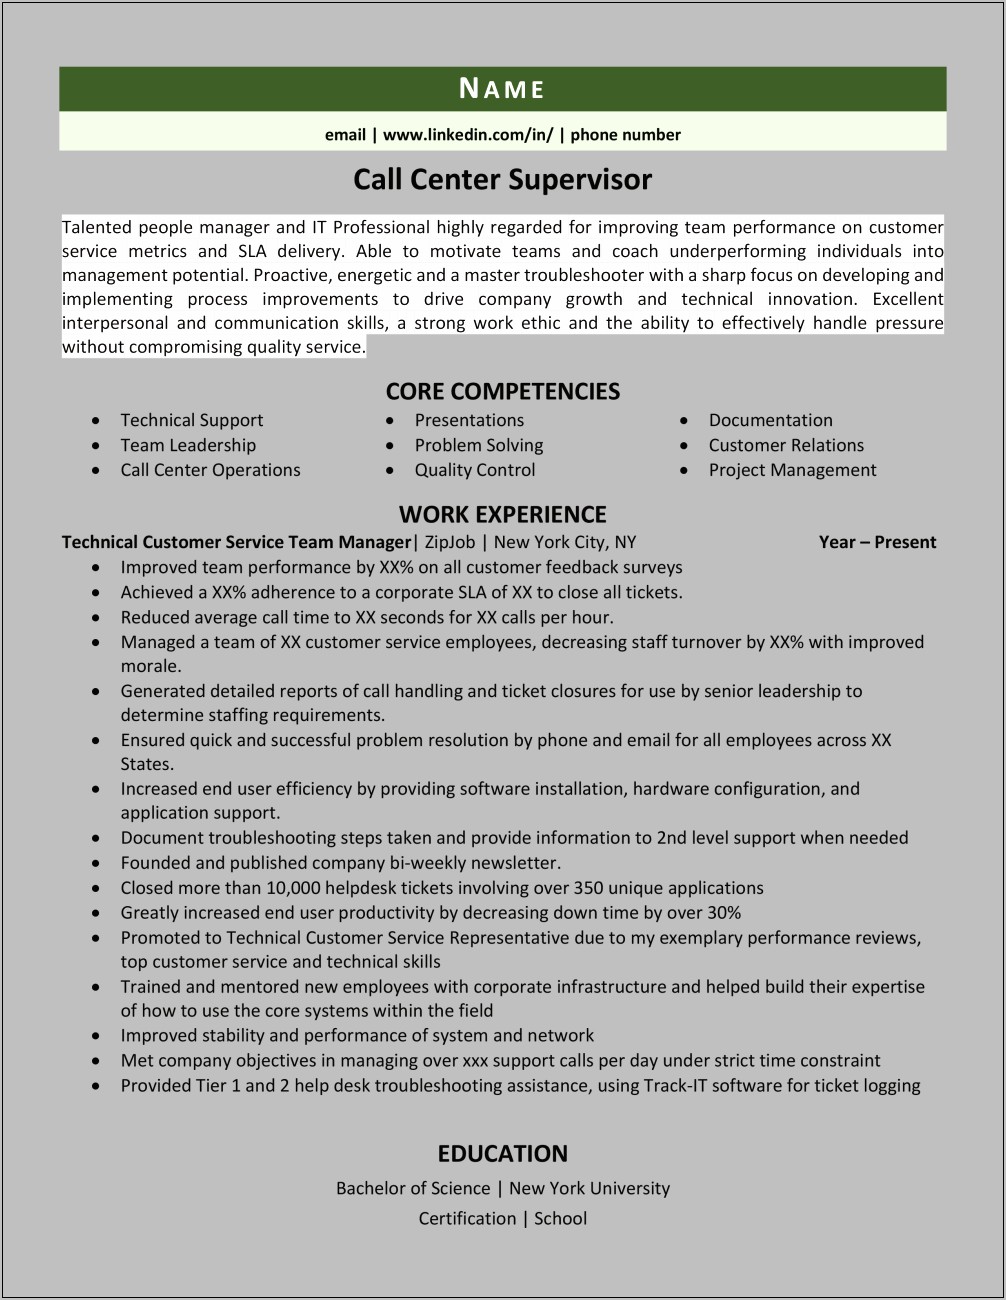 Contact Center Supervisor Resume Sample